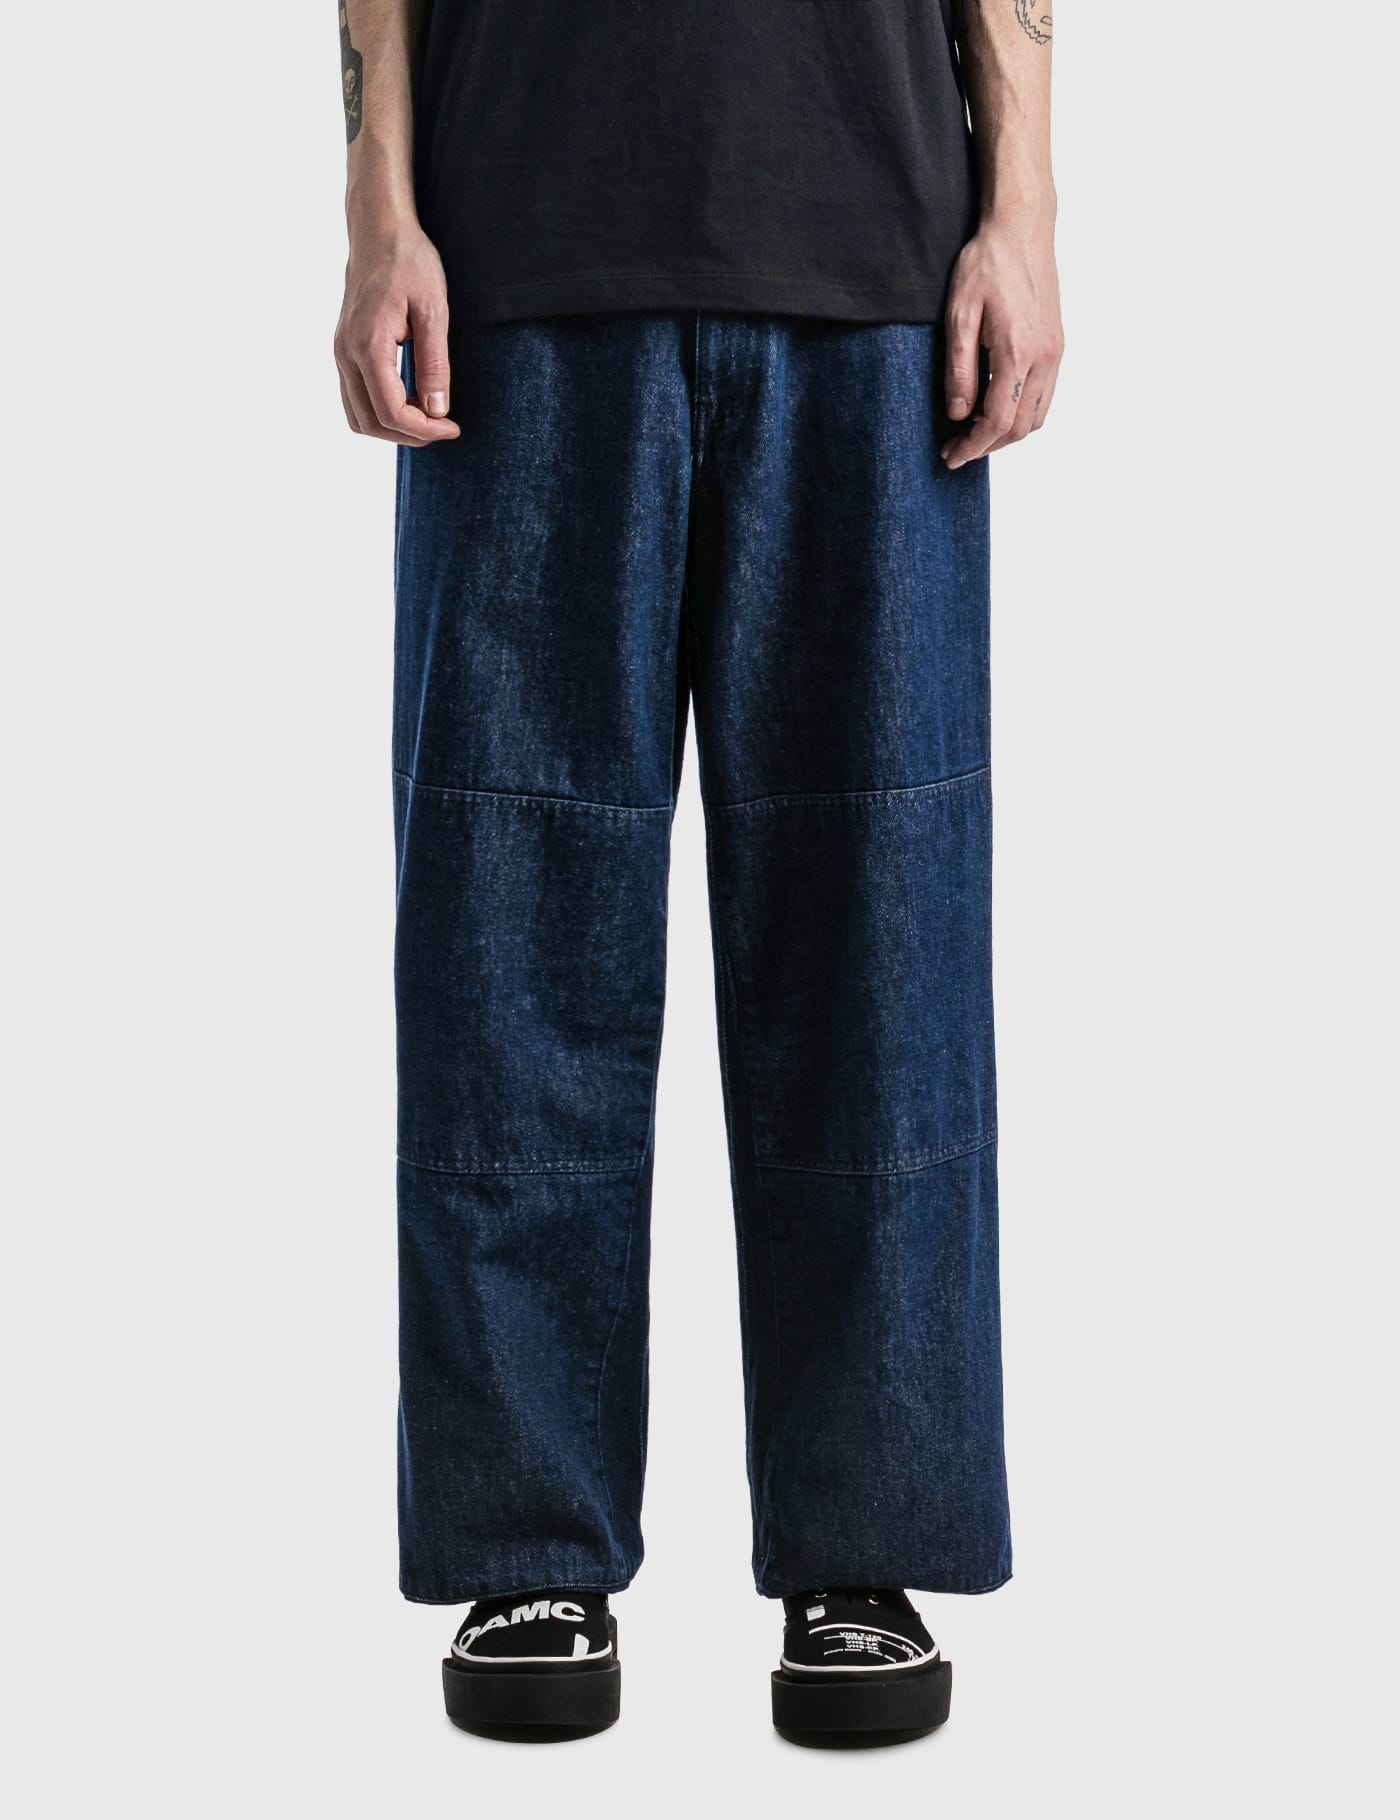 Raf Simons - Denim Workwear Pants | HBX - Globally Curated Fashion 